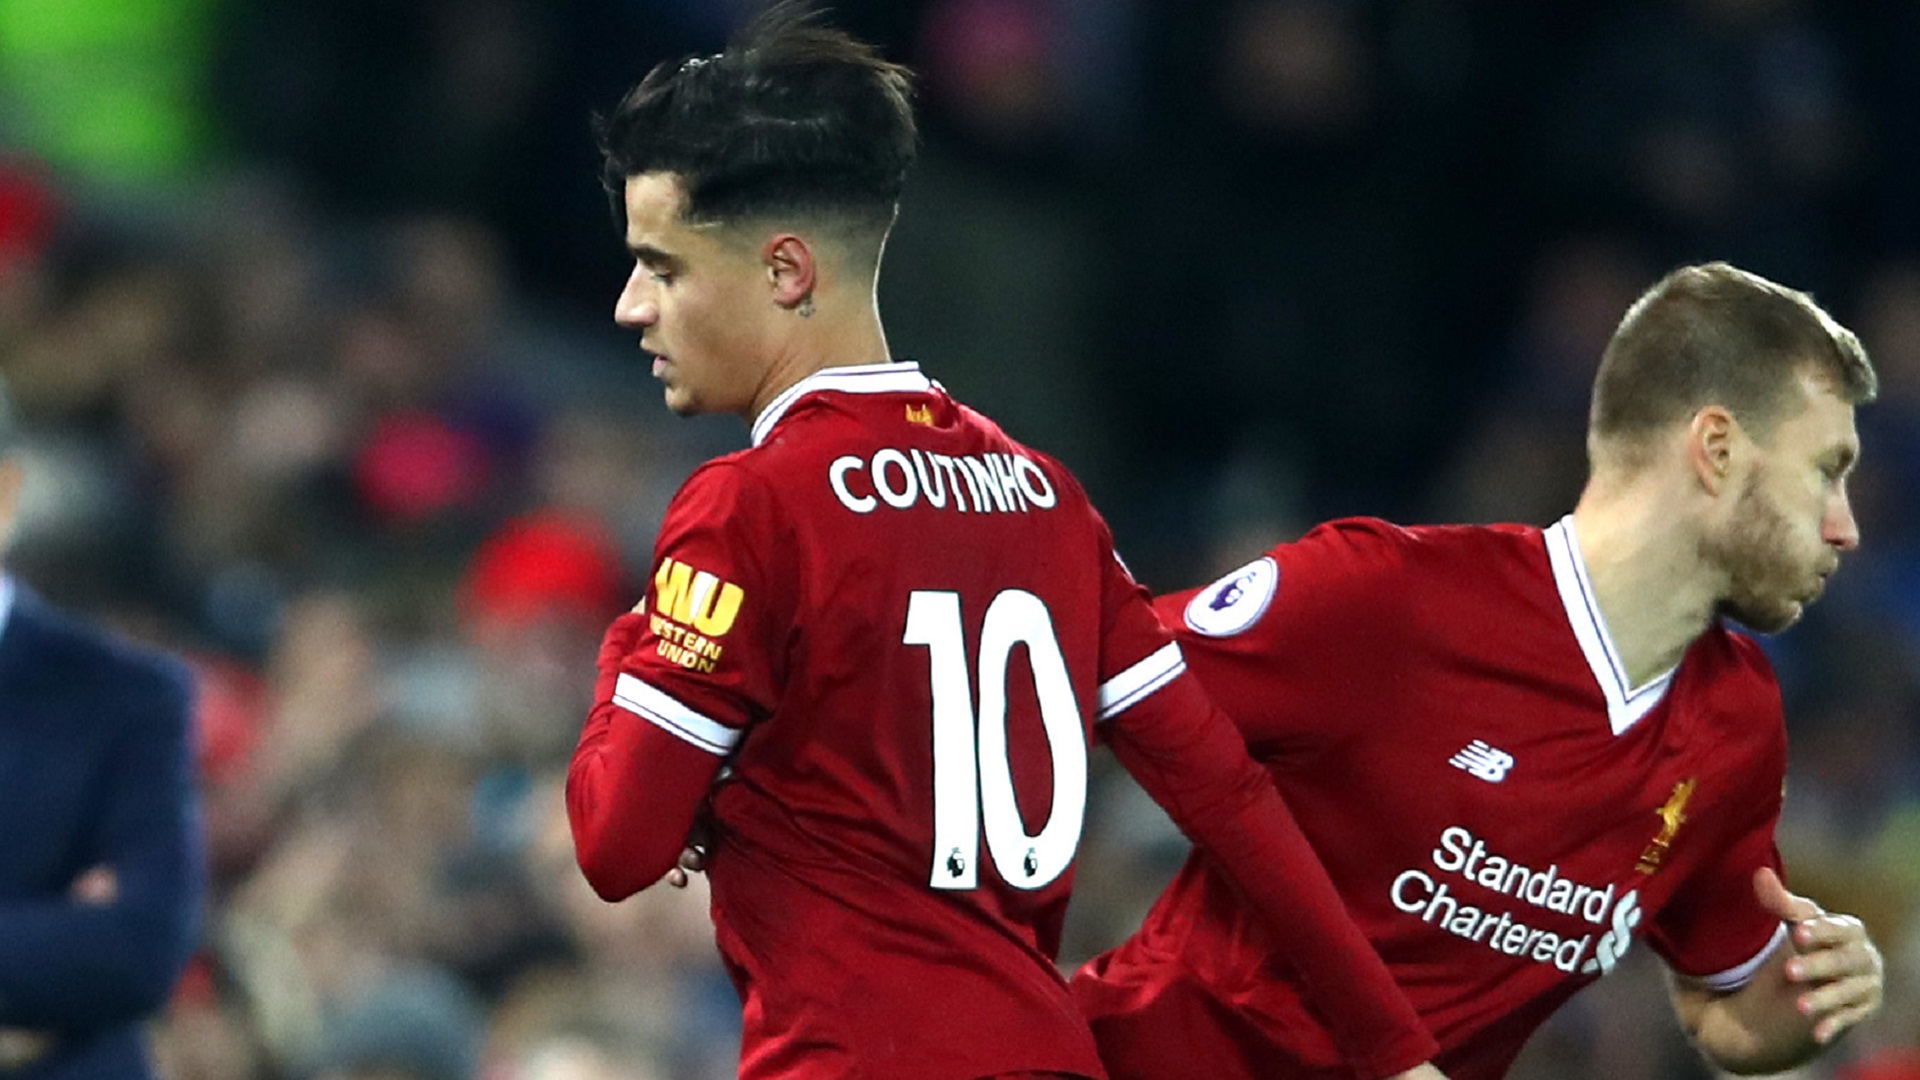 2018-01-03 Coutinho Liverpool